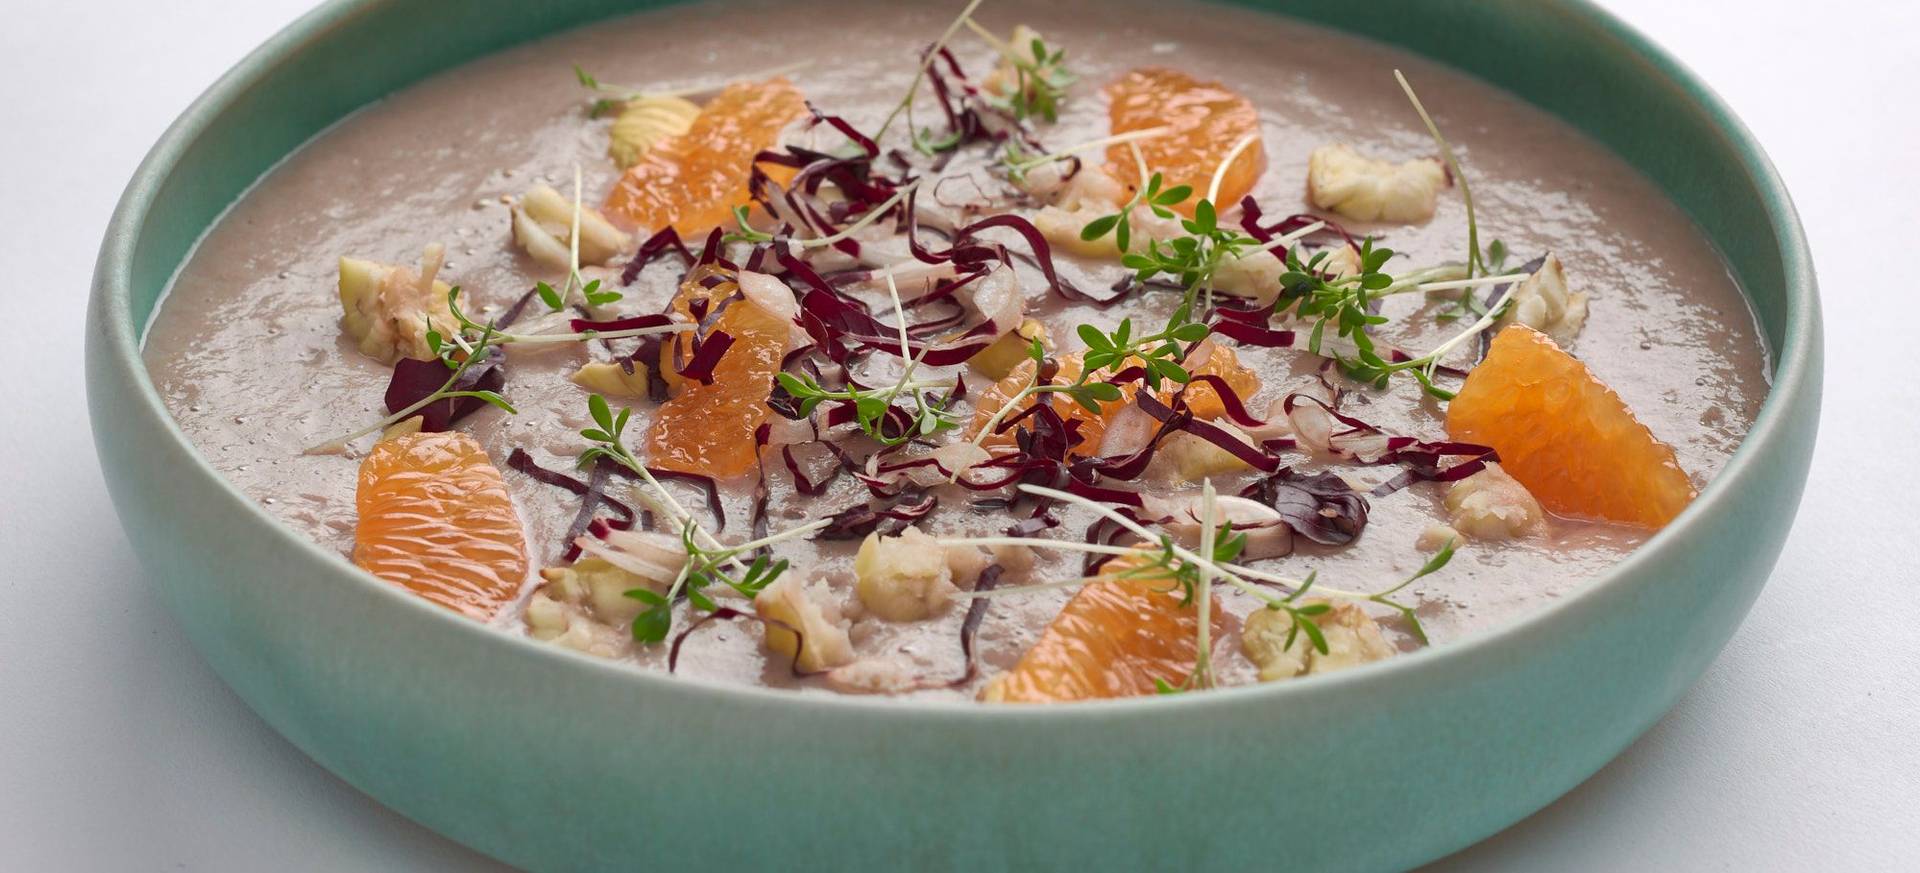 Parsnip Soup with Radicchio, Tangerine & Chestnuts